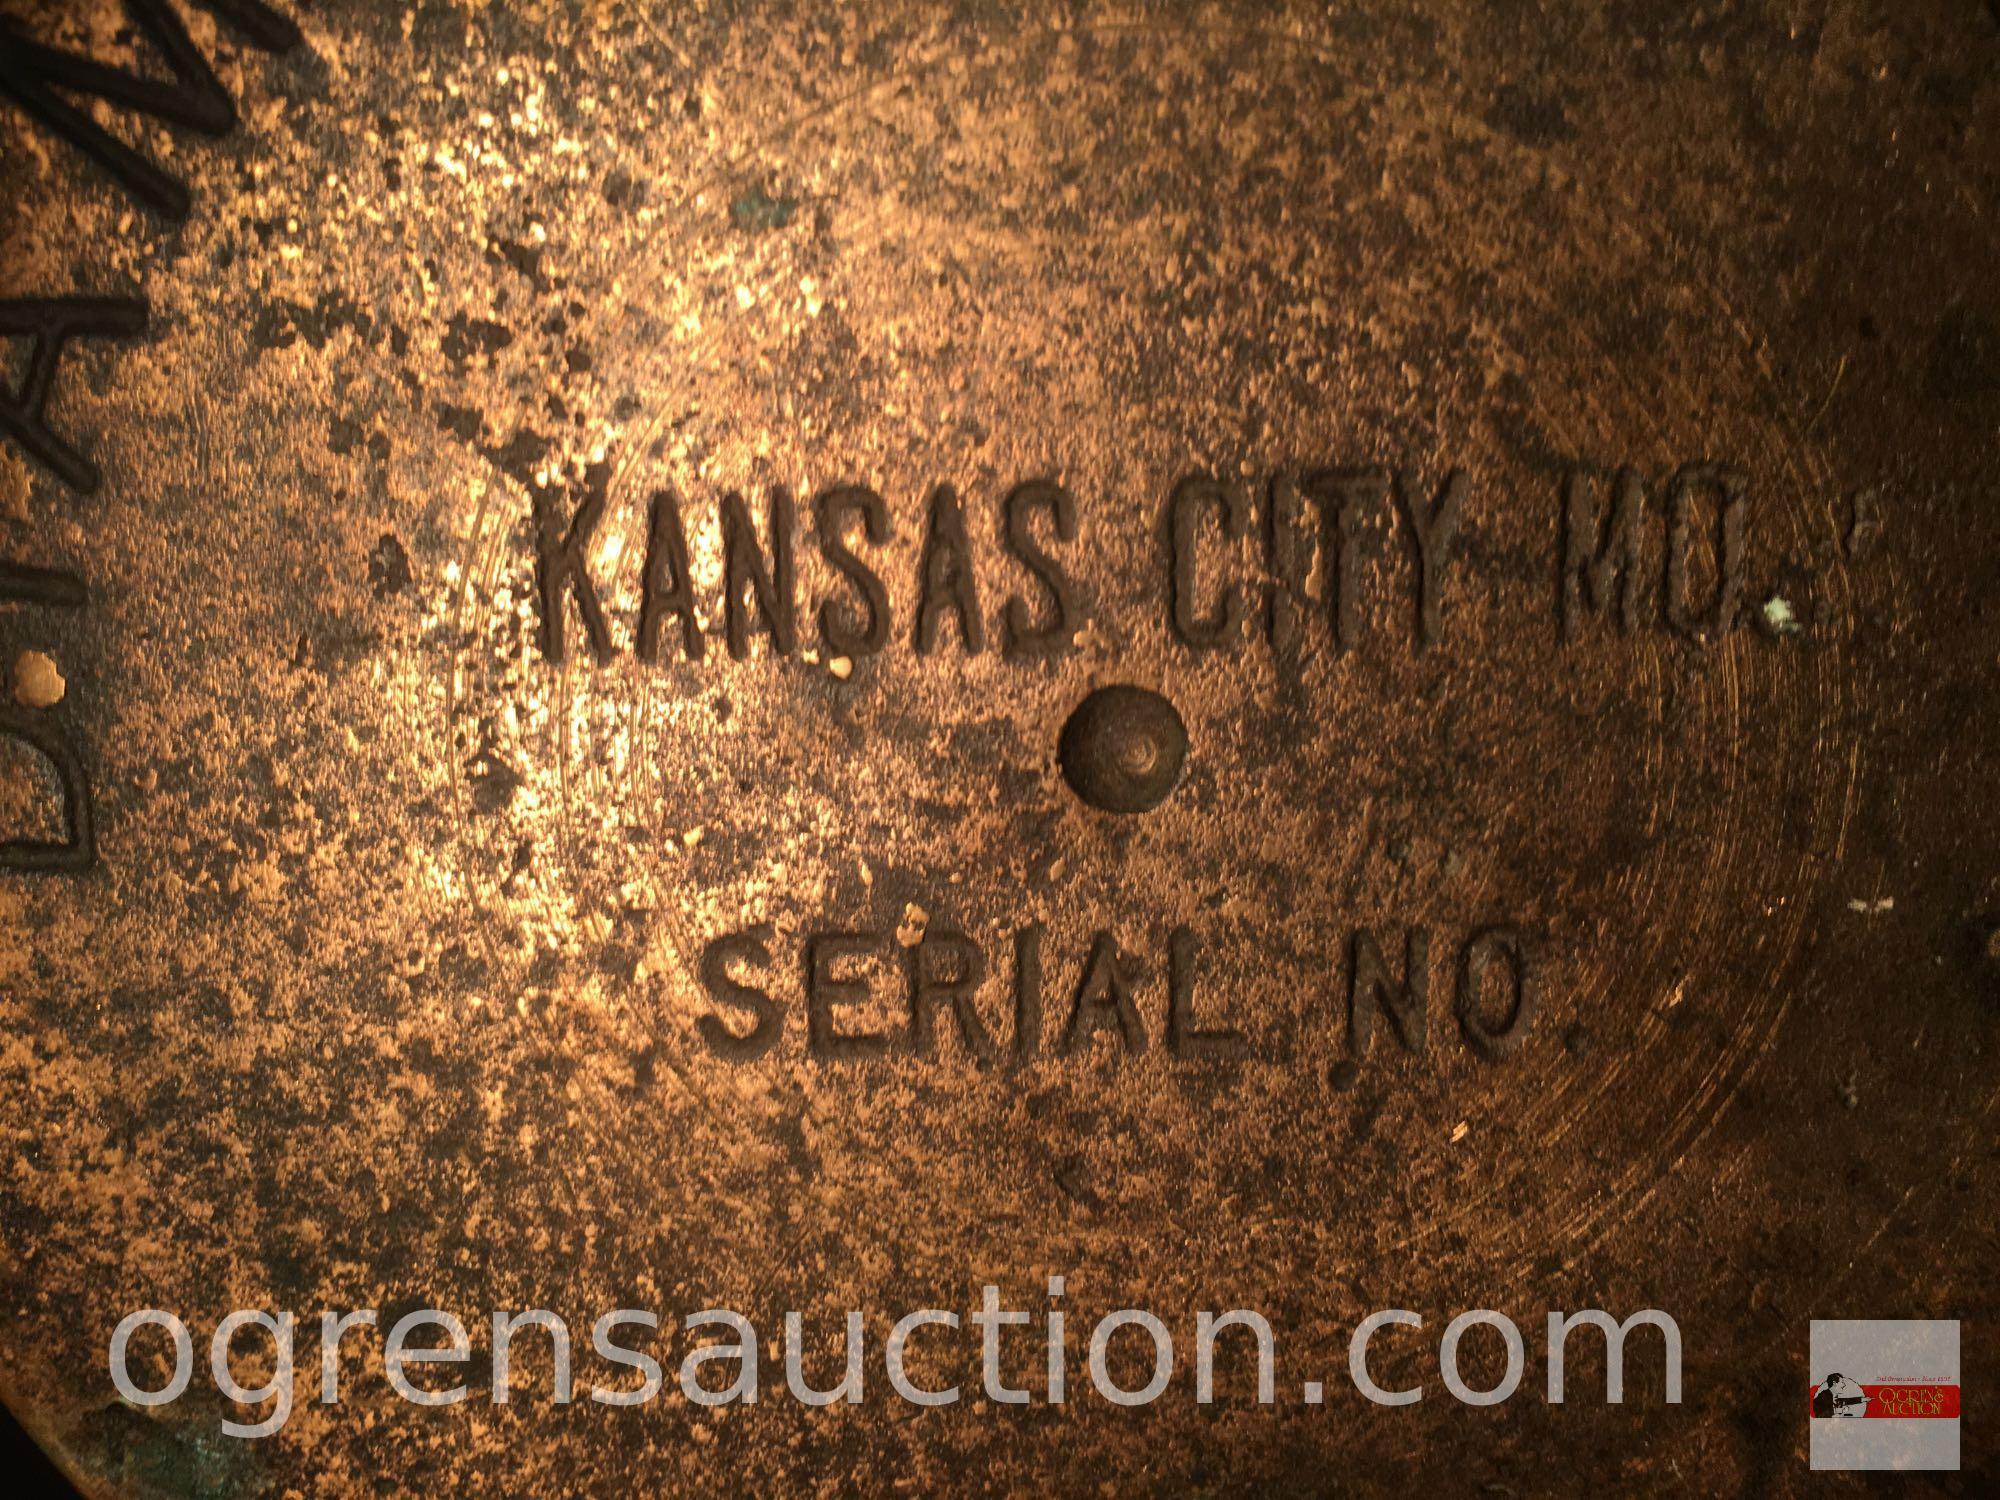 Vintage in-ground safe cylinder, Diamond Manuf. Co. Kansas City 12.5"h